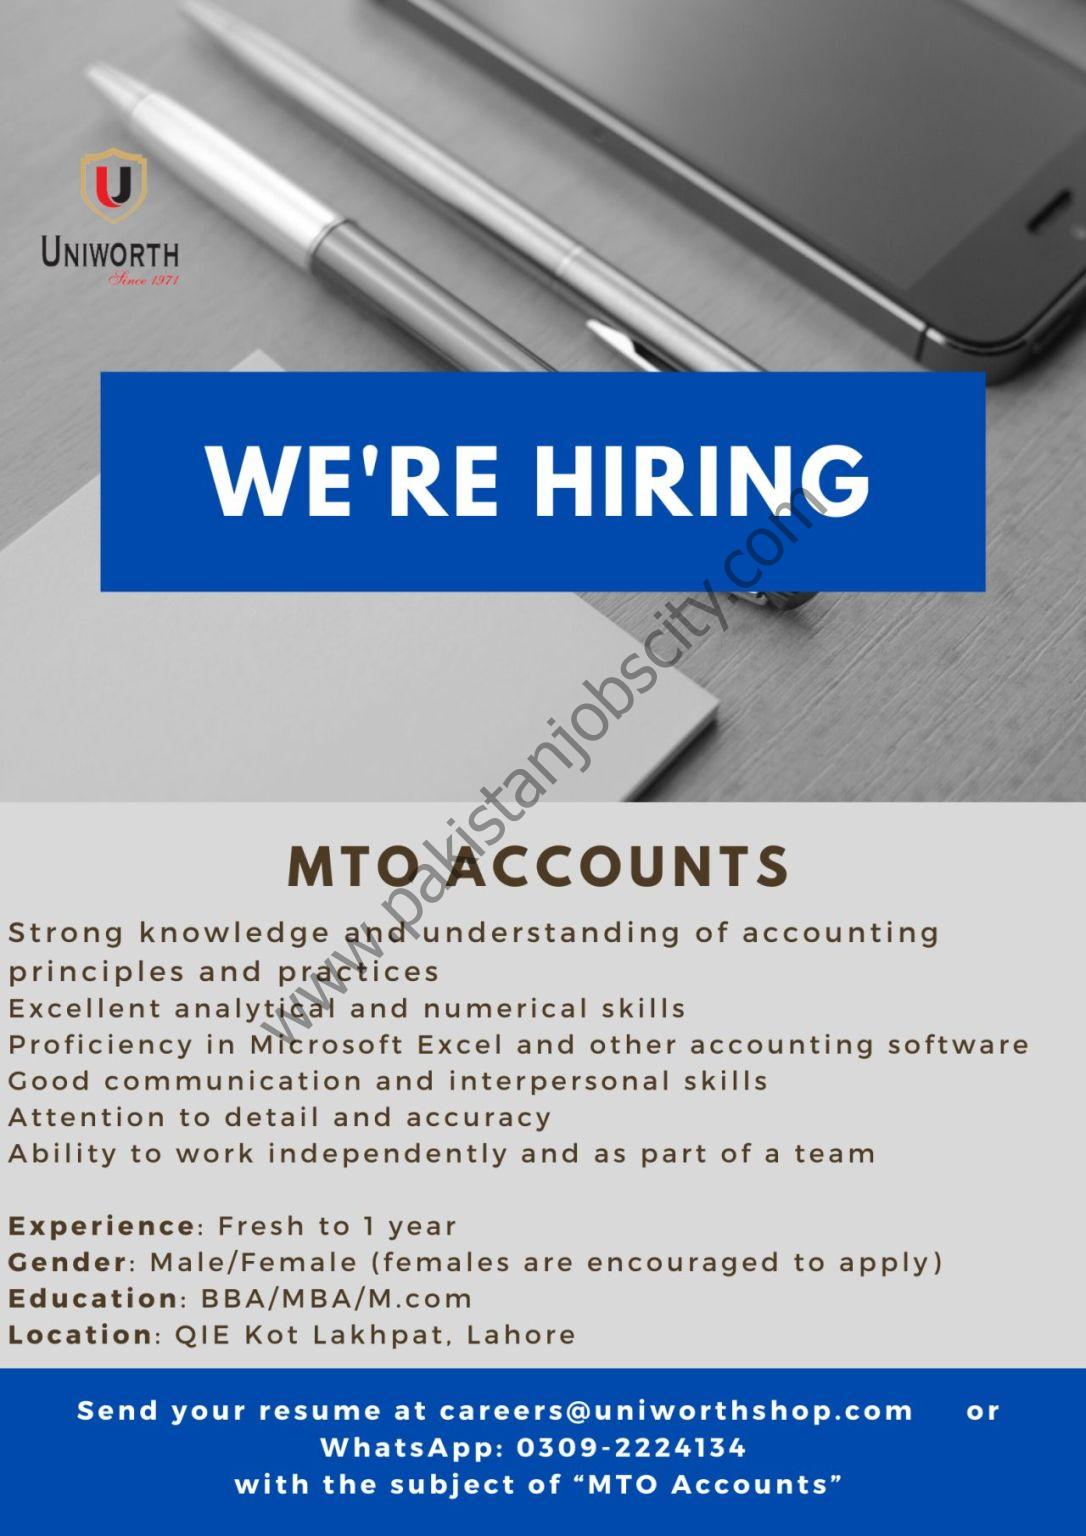 Uniworth Jobs MTO Accounts